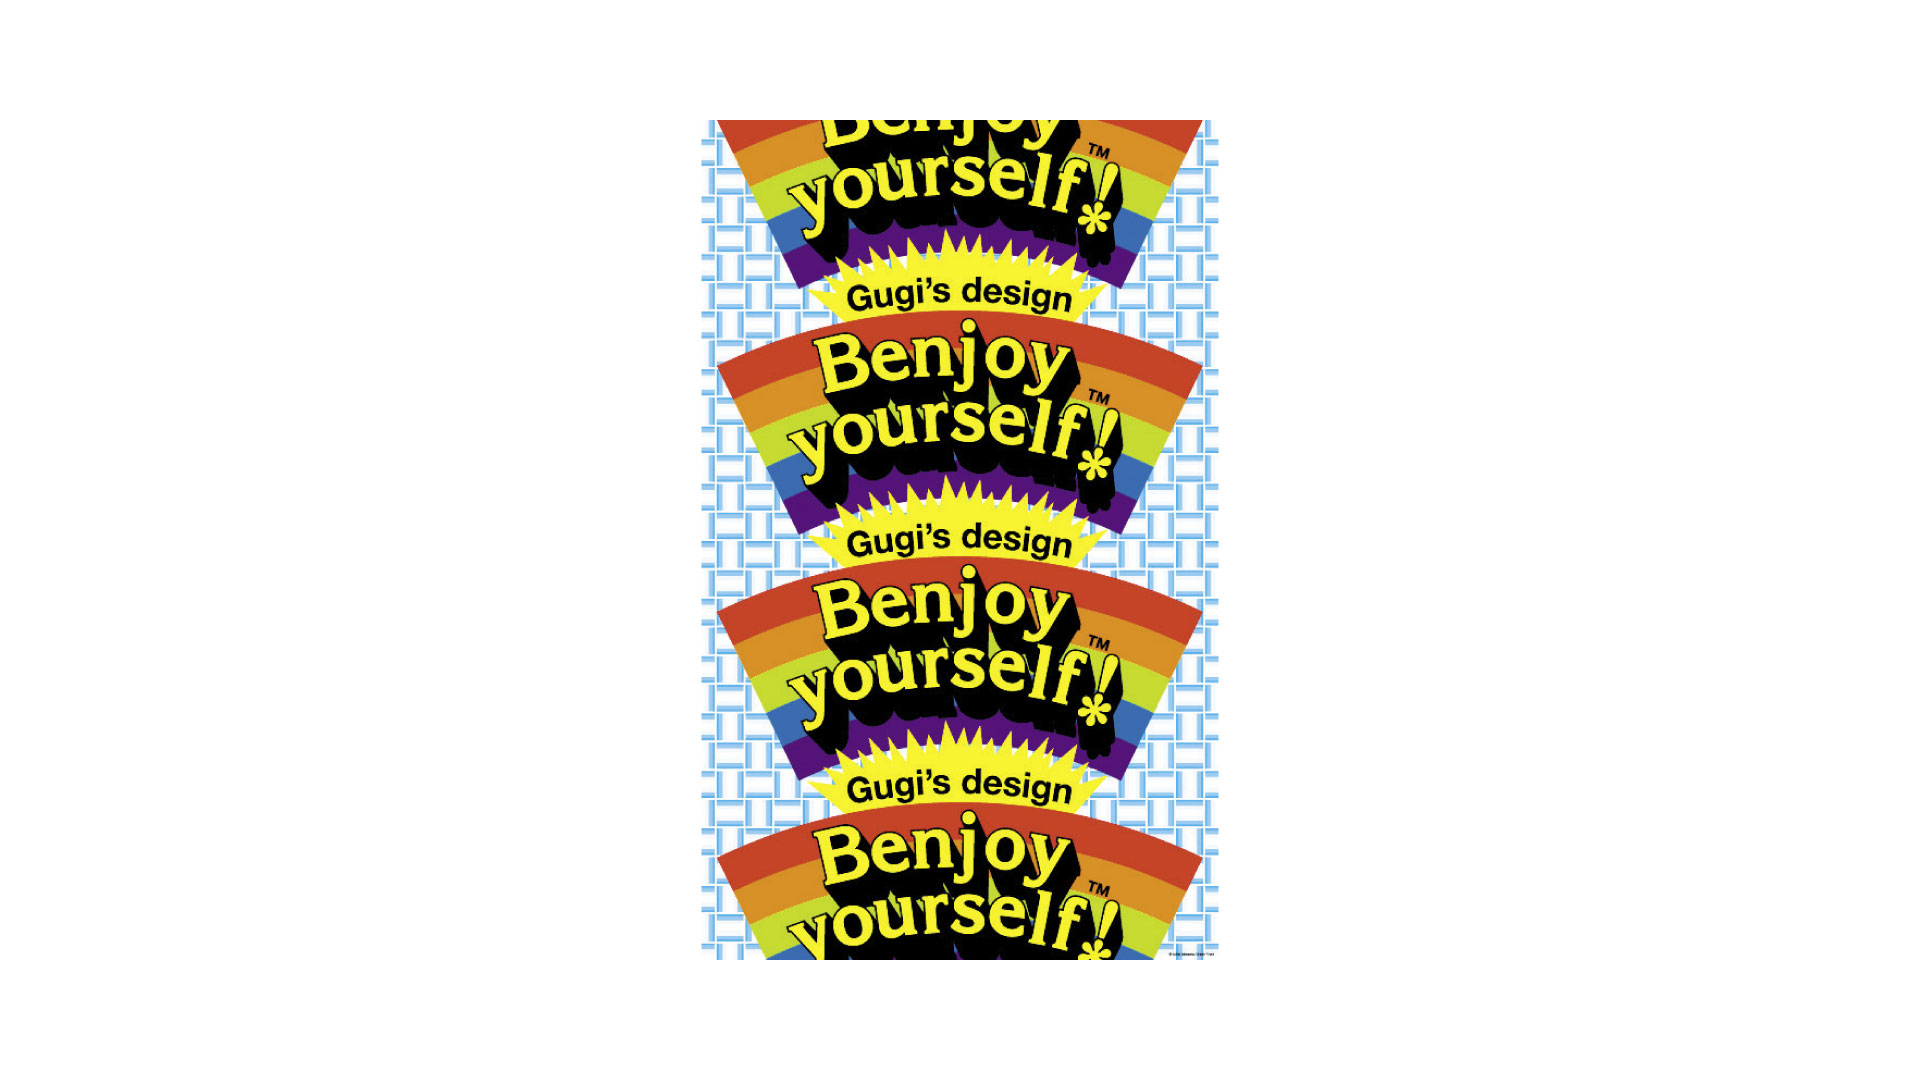 Benjoy yourself!